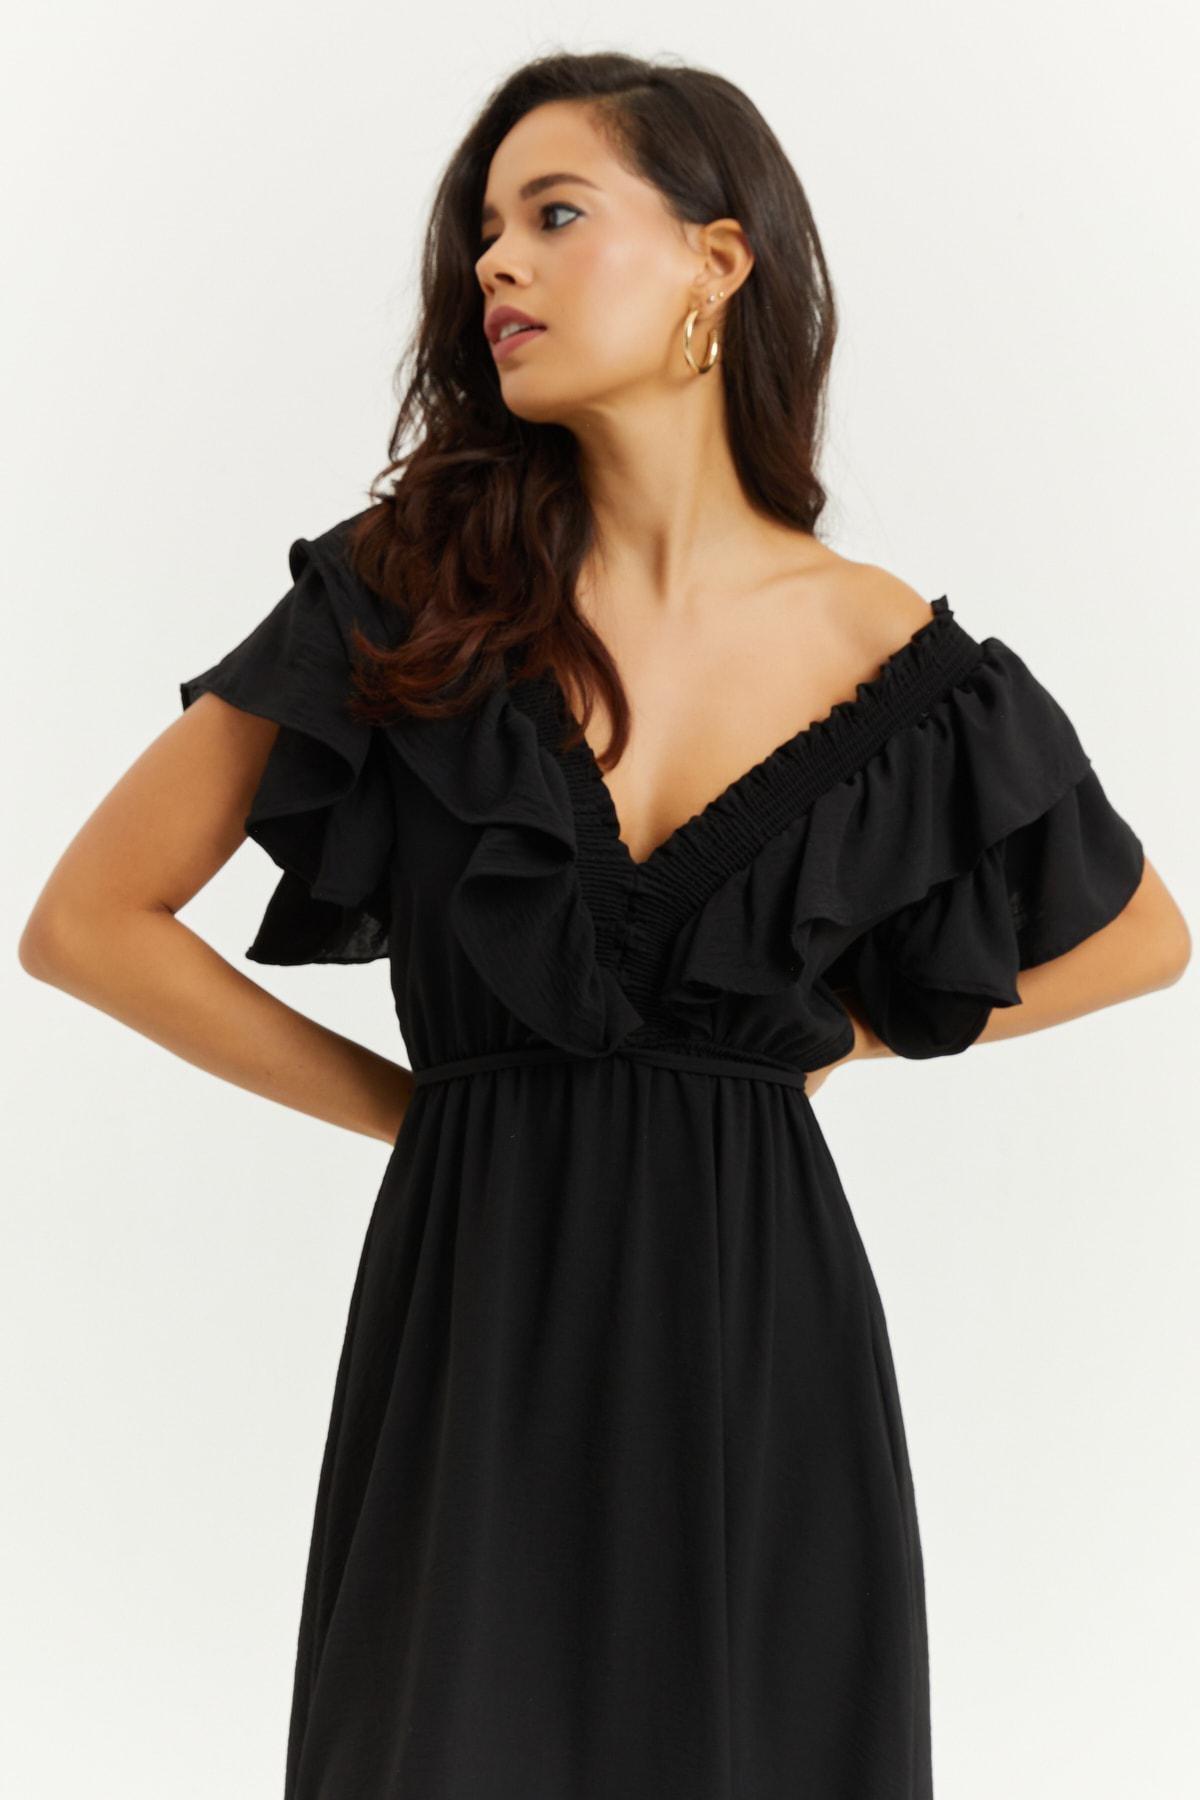 Cool & Sexy - Black Puffed Sleeve A-Line Dress